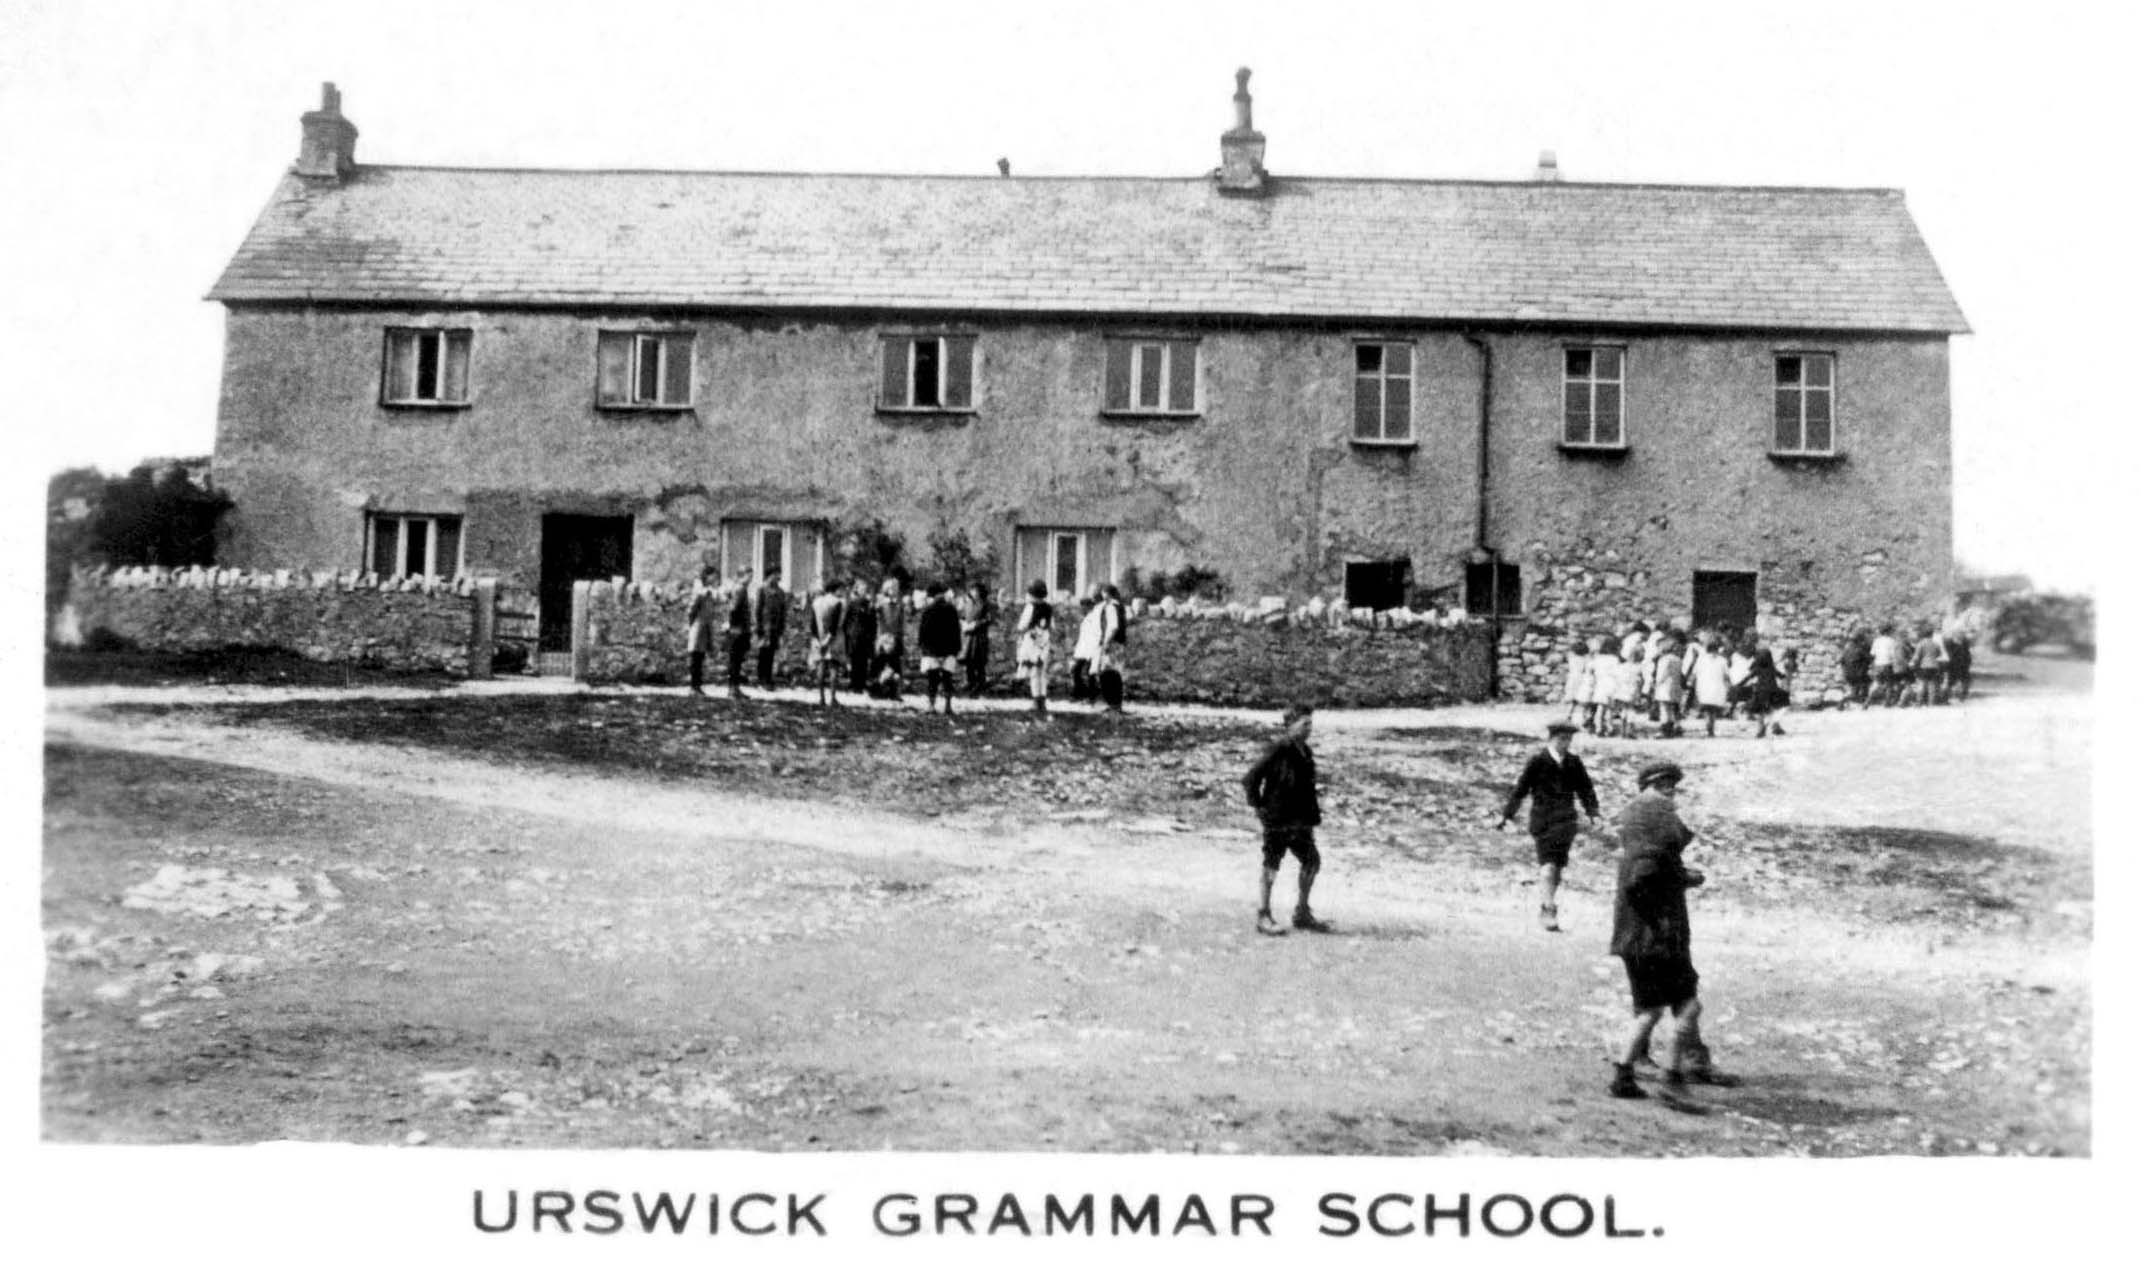 Urswick Grammar School